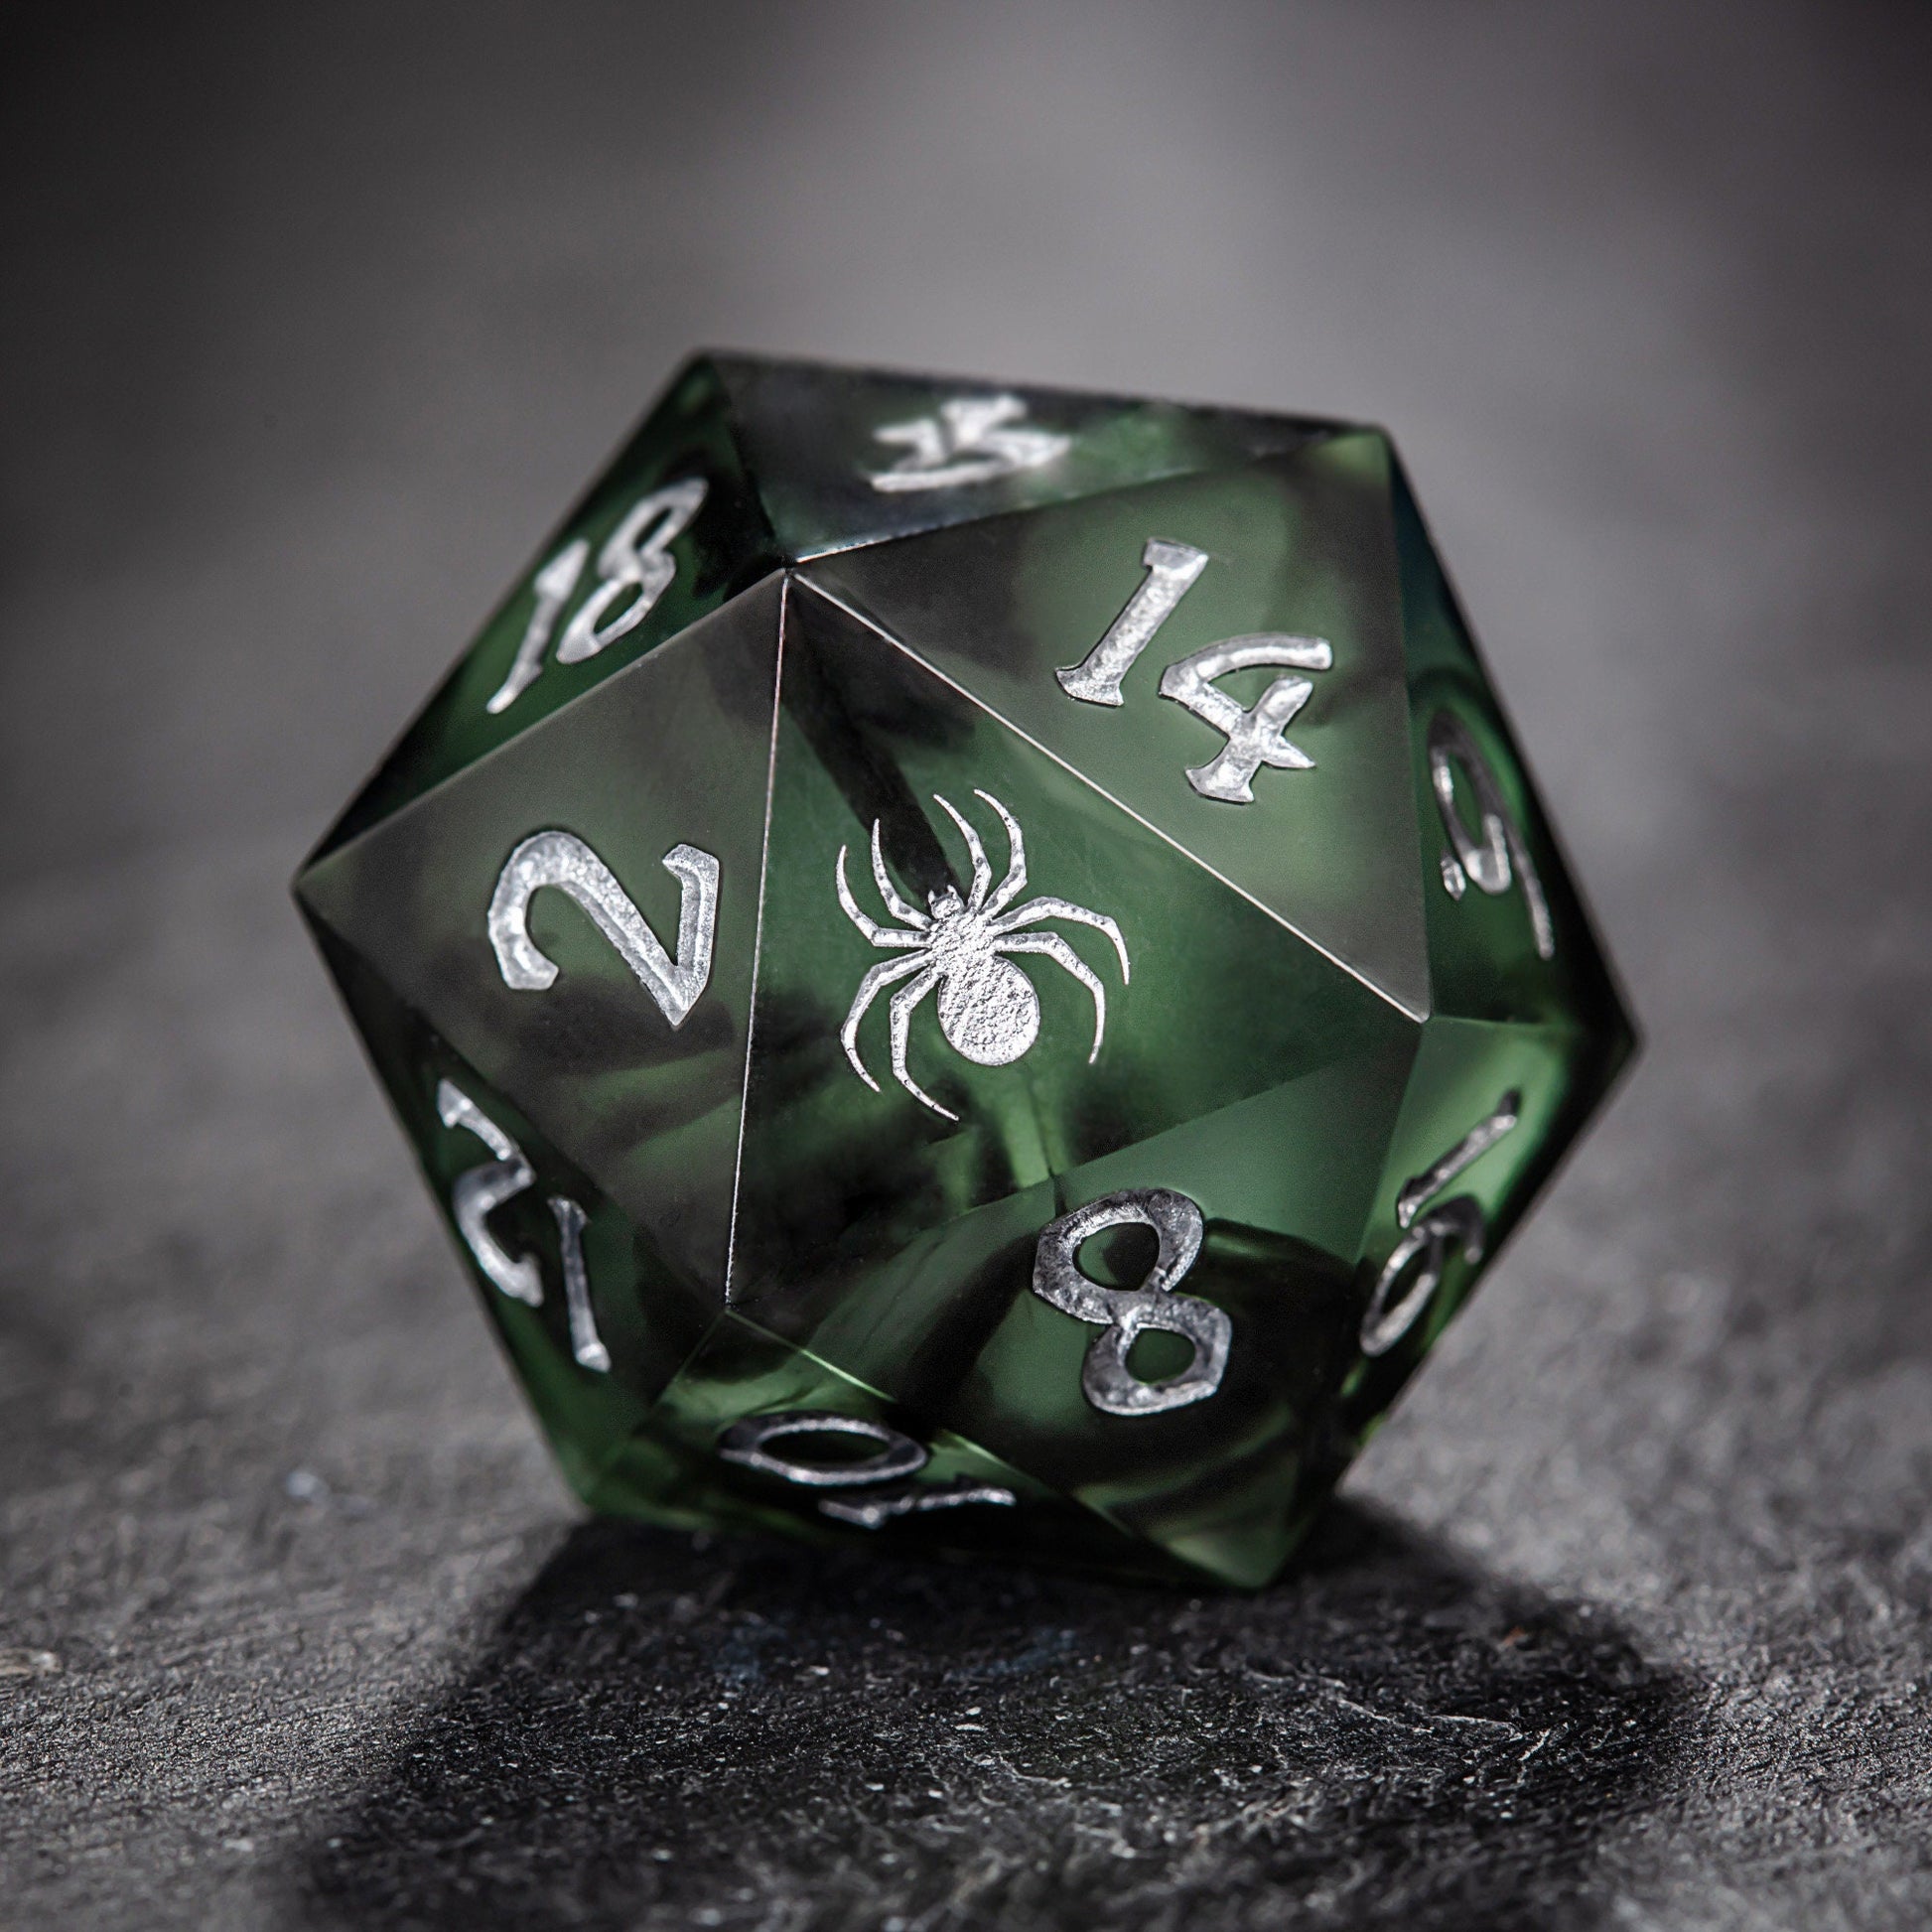 Smoky Dark Olive Spider DnD D&D Dice Set - CrystalMaggie